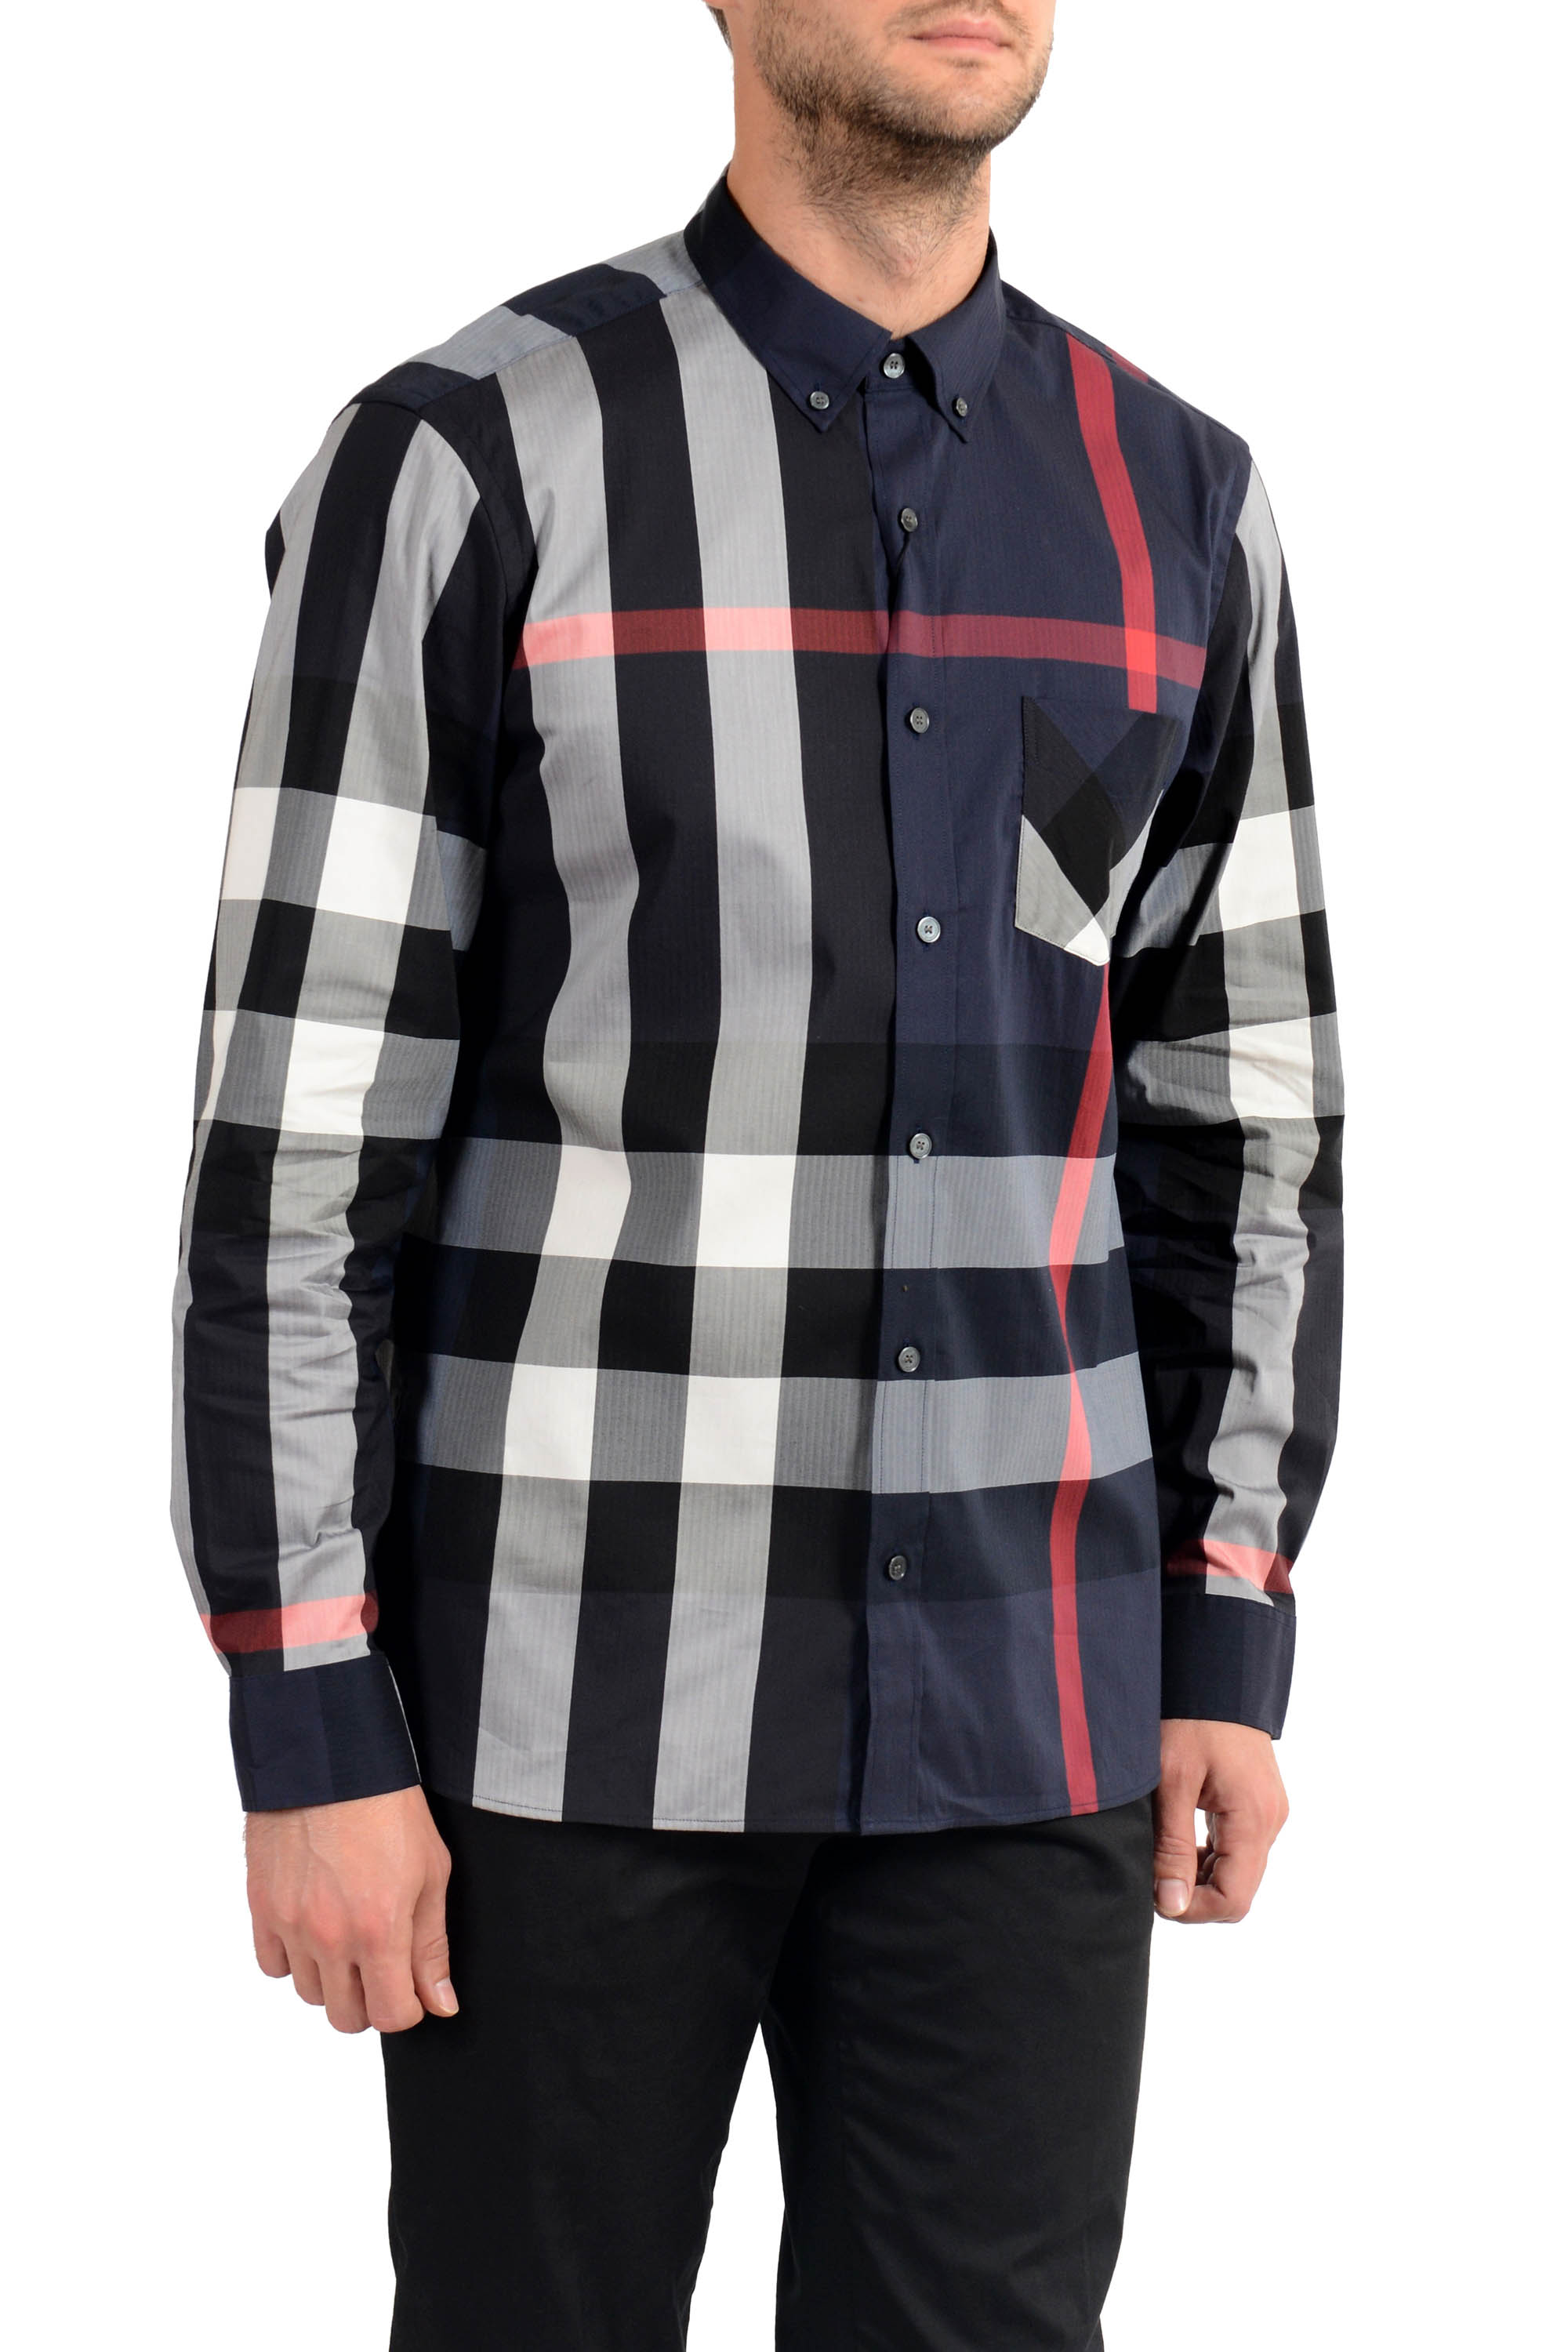 Burberry Shirt Colors Online | website.jkuat.ac.ke